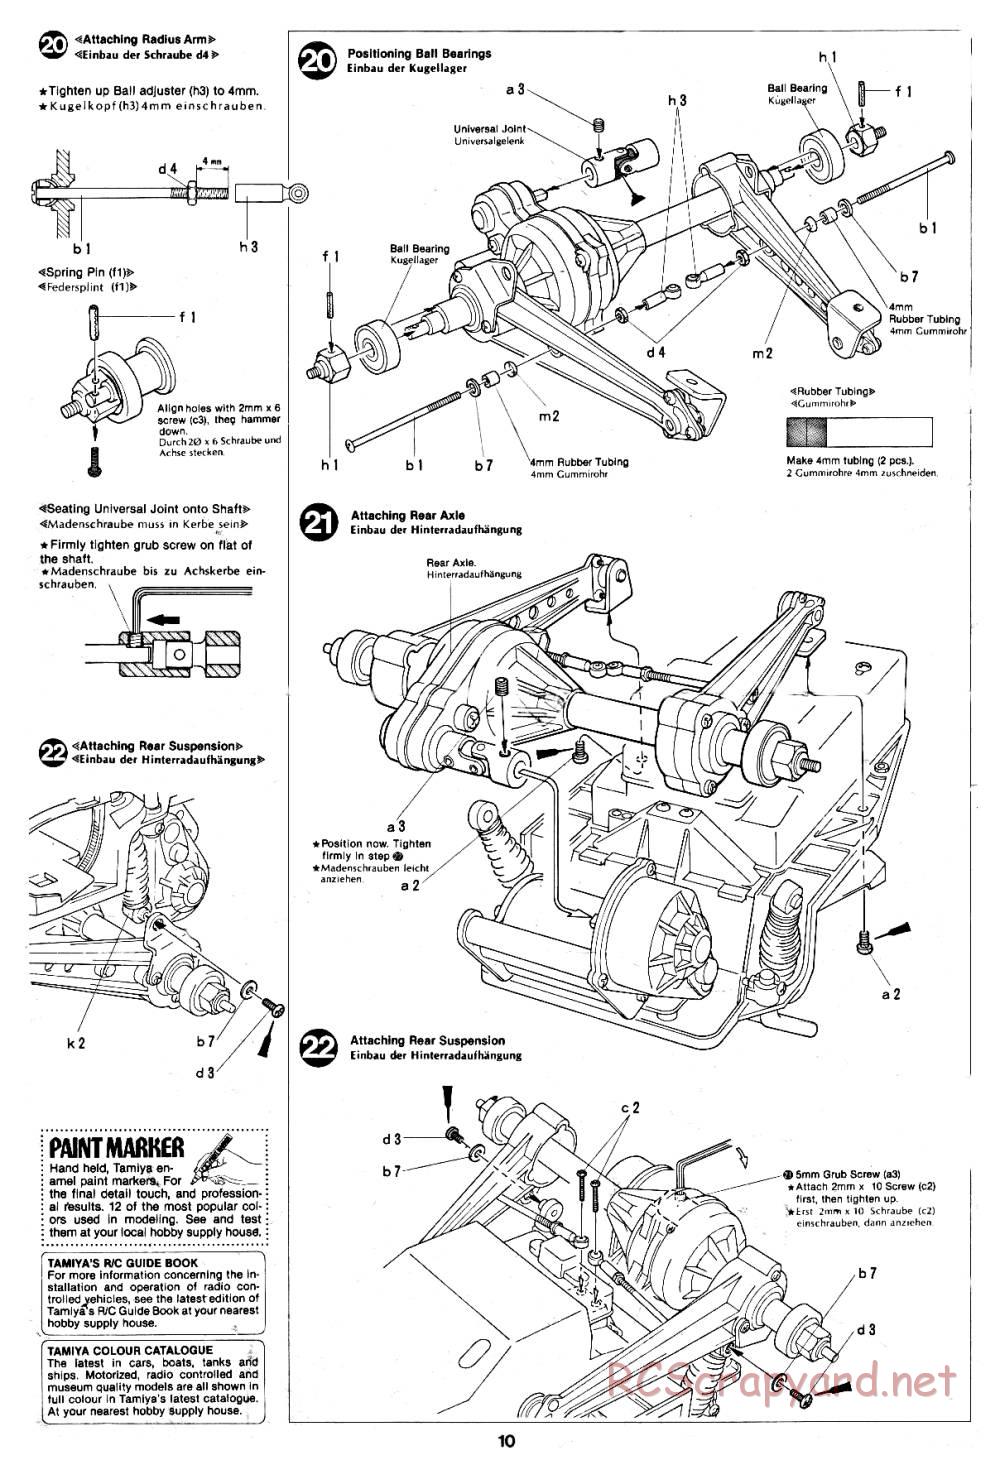 Tamiya - Audi Quattro Rally - 58036 - Manual - Page 10